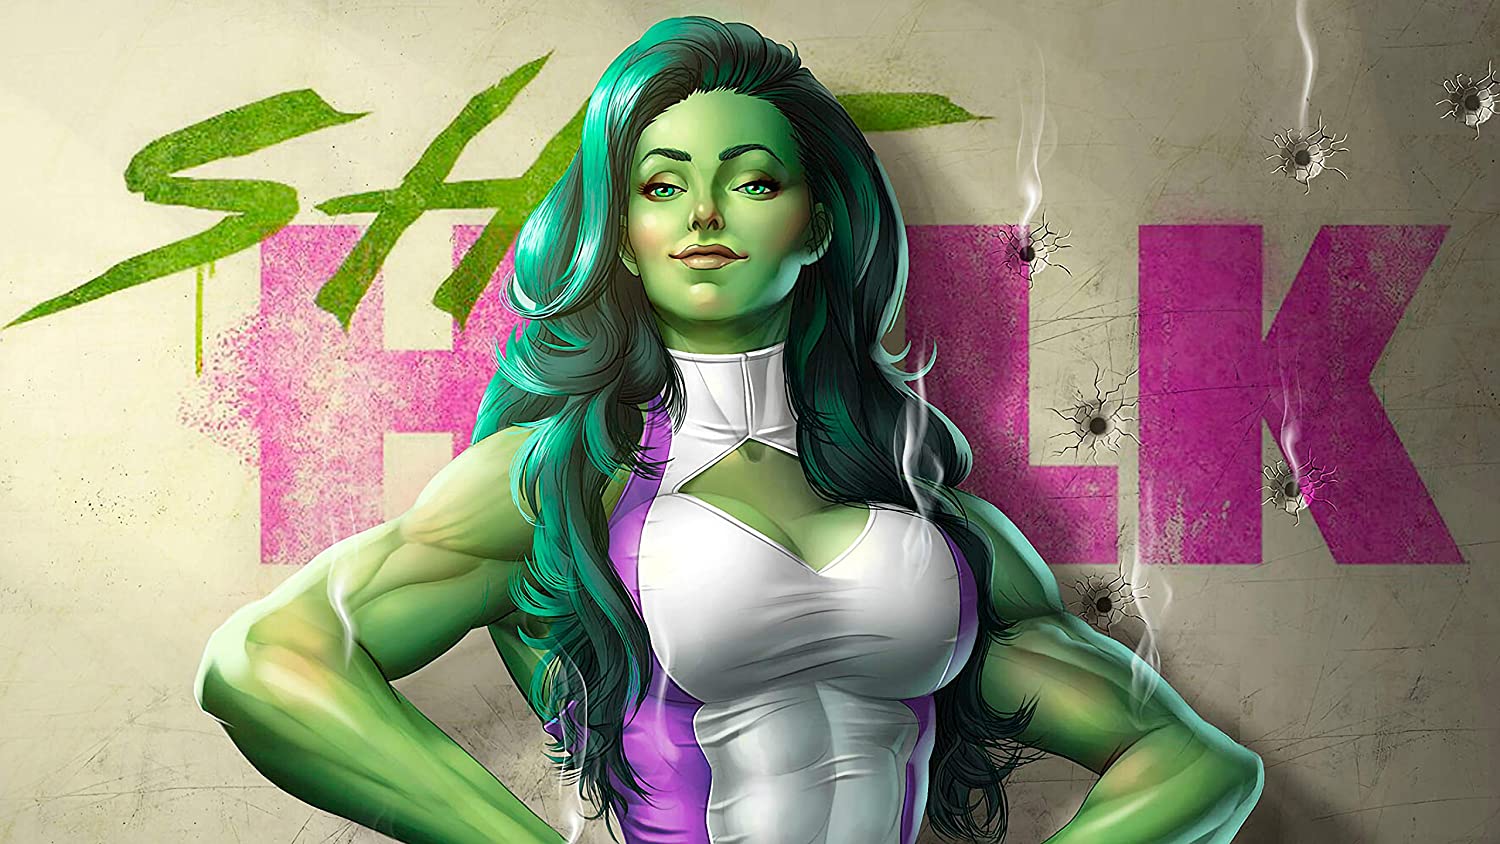 she-hulk character poster